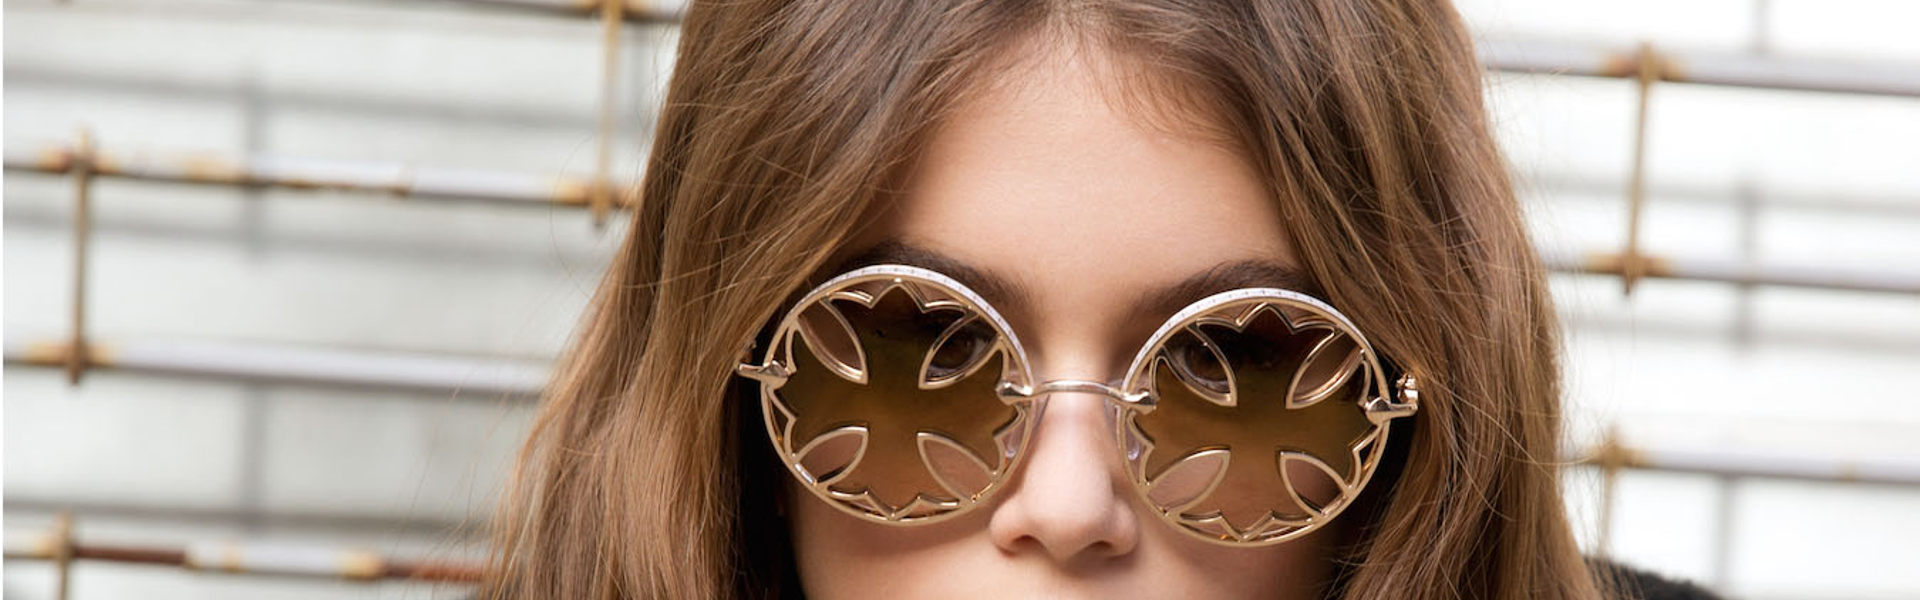 chrome-hearts-eyewear-glasses-eyeglasses-sunglasses-frames-polarized-designer-luxury-fashion-chrome-hearts-accessories-sterling-silver